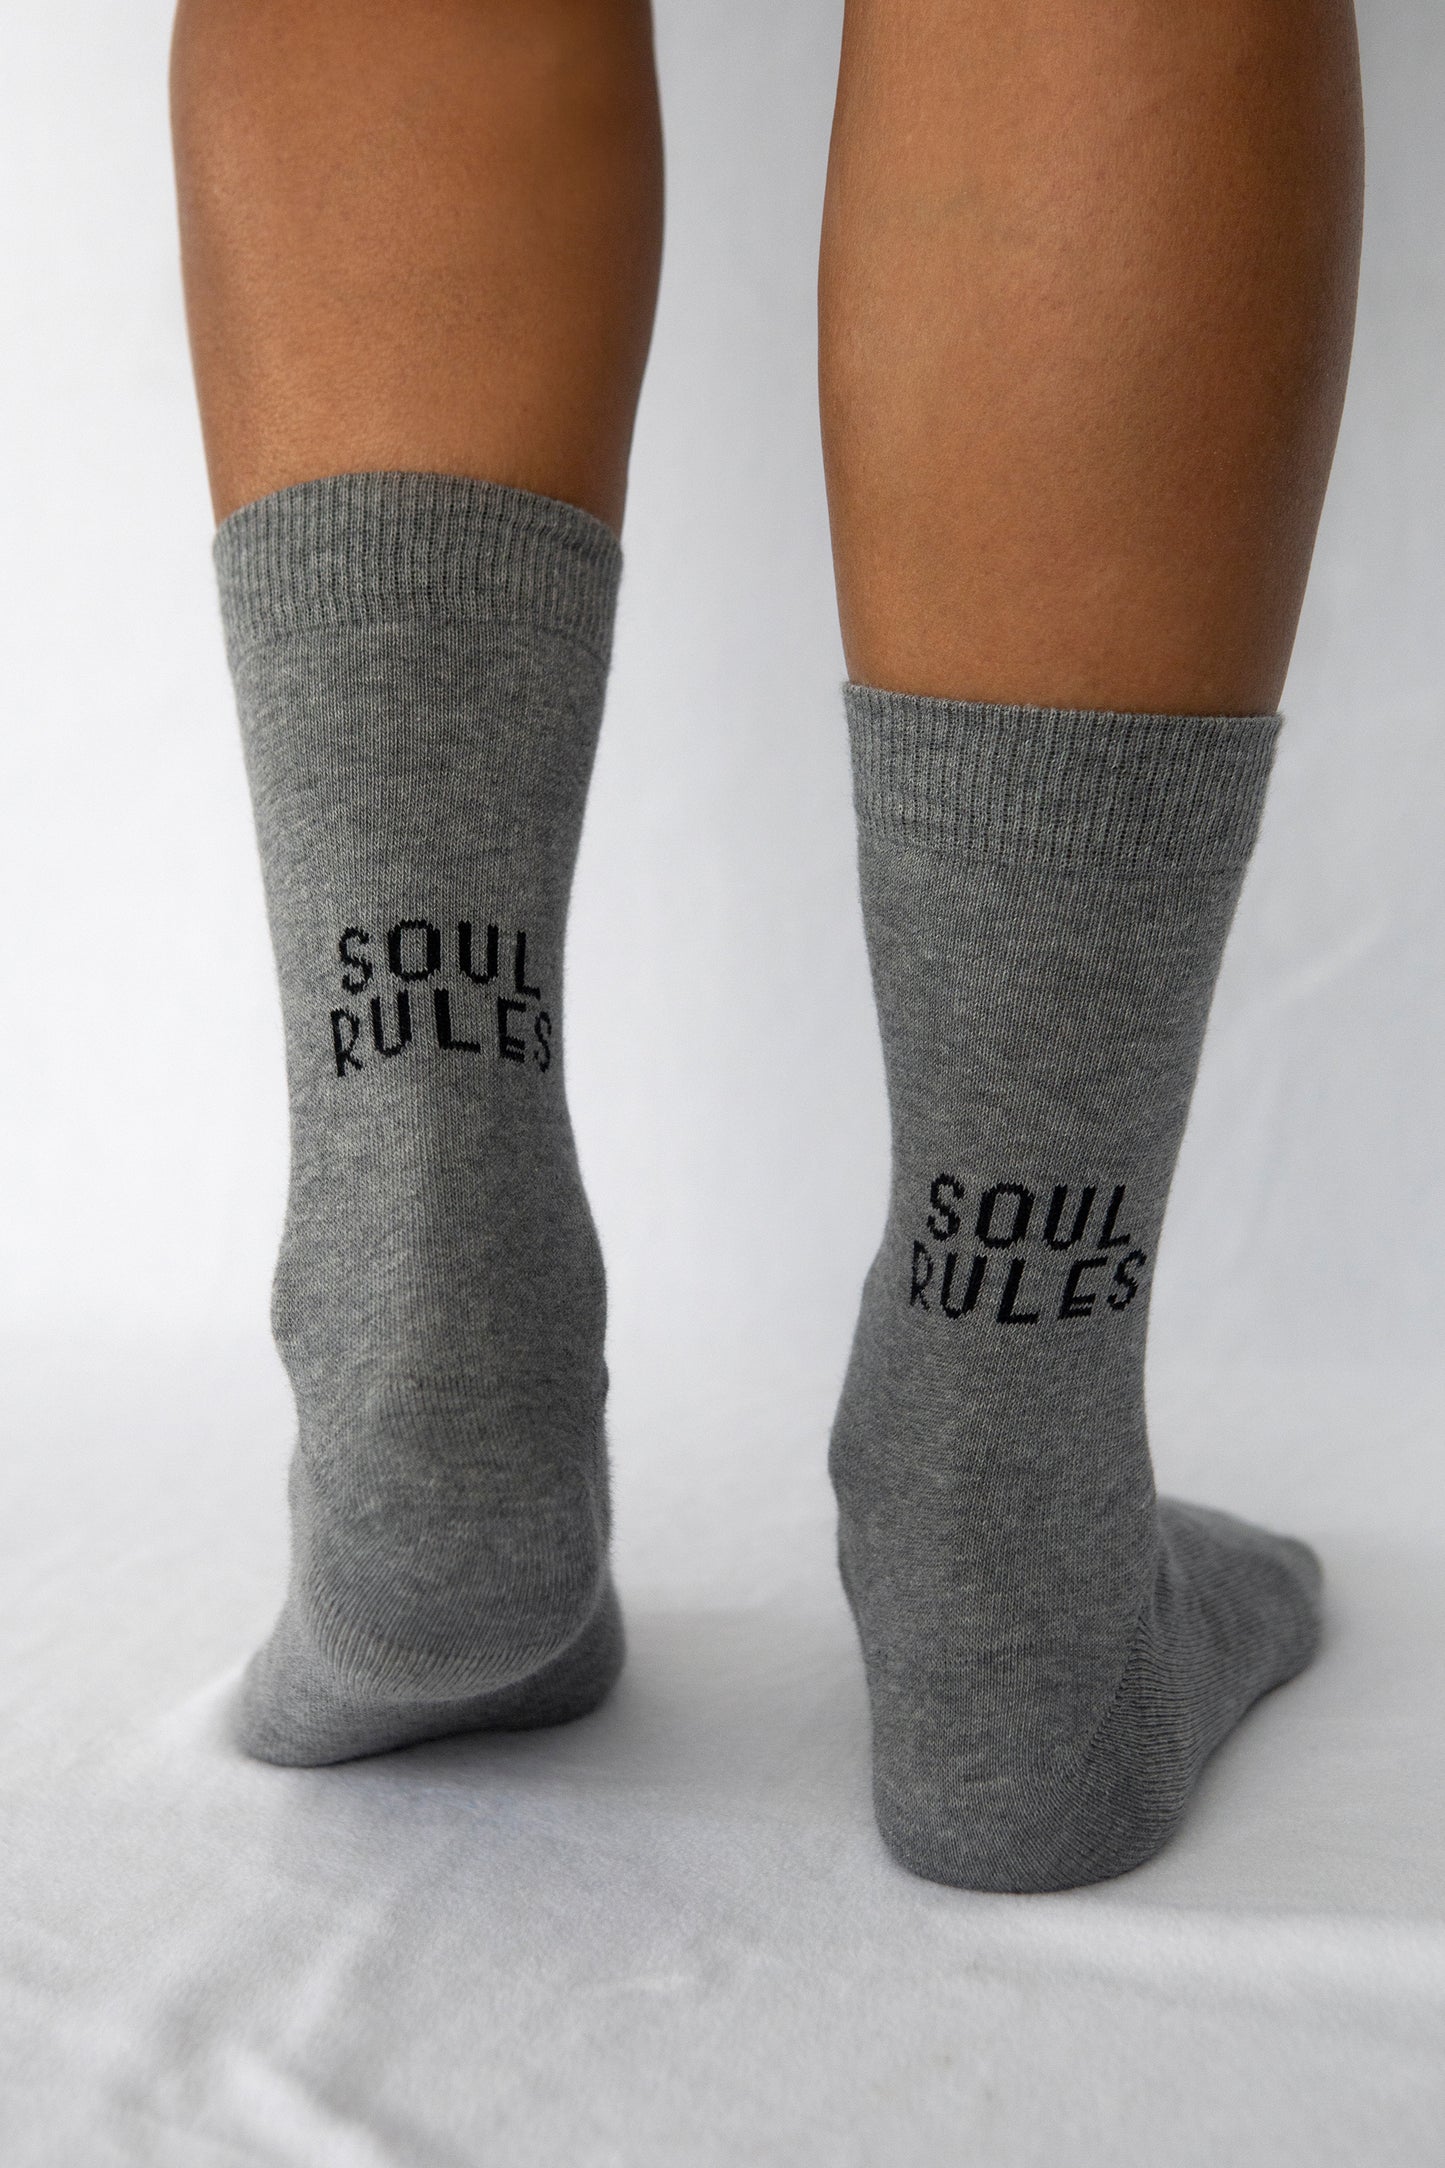 Soul Socks